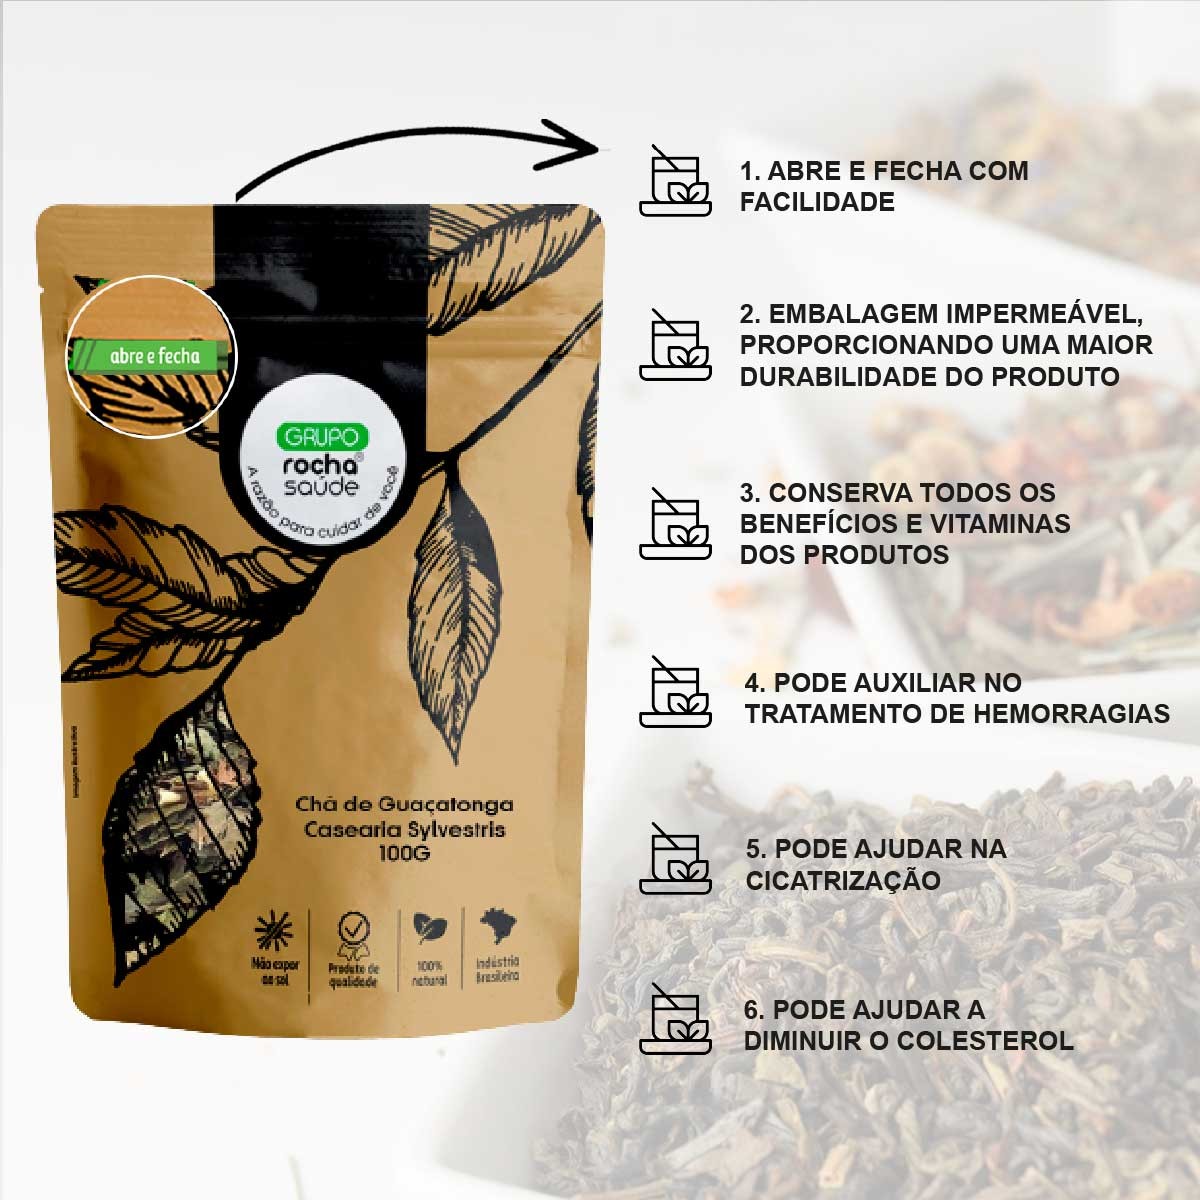 Chá de Guaçatonga - Casearia Sylvestris - 100G